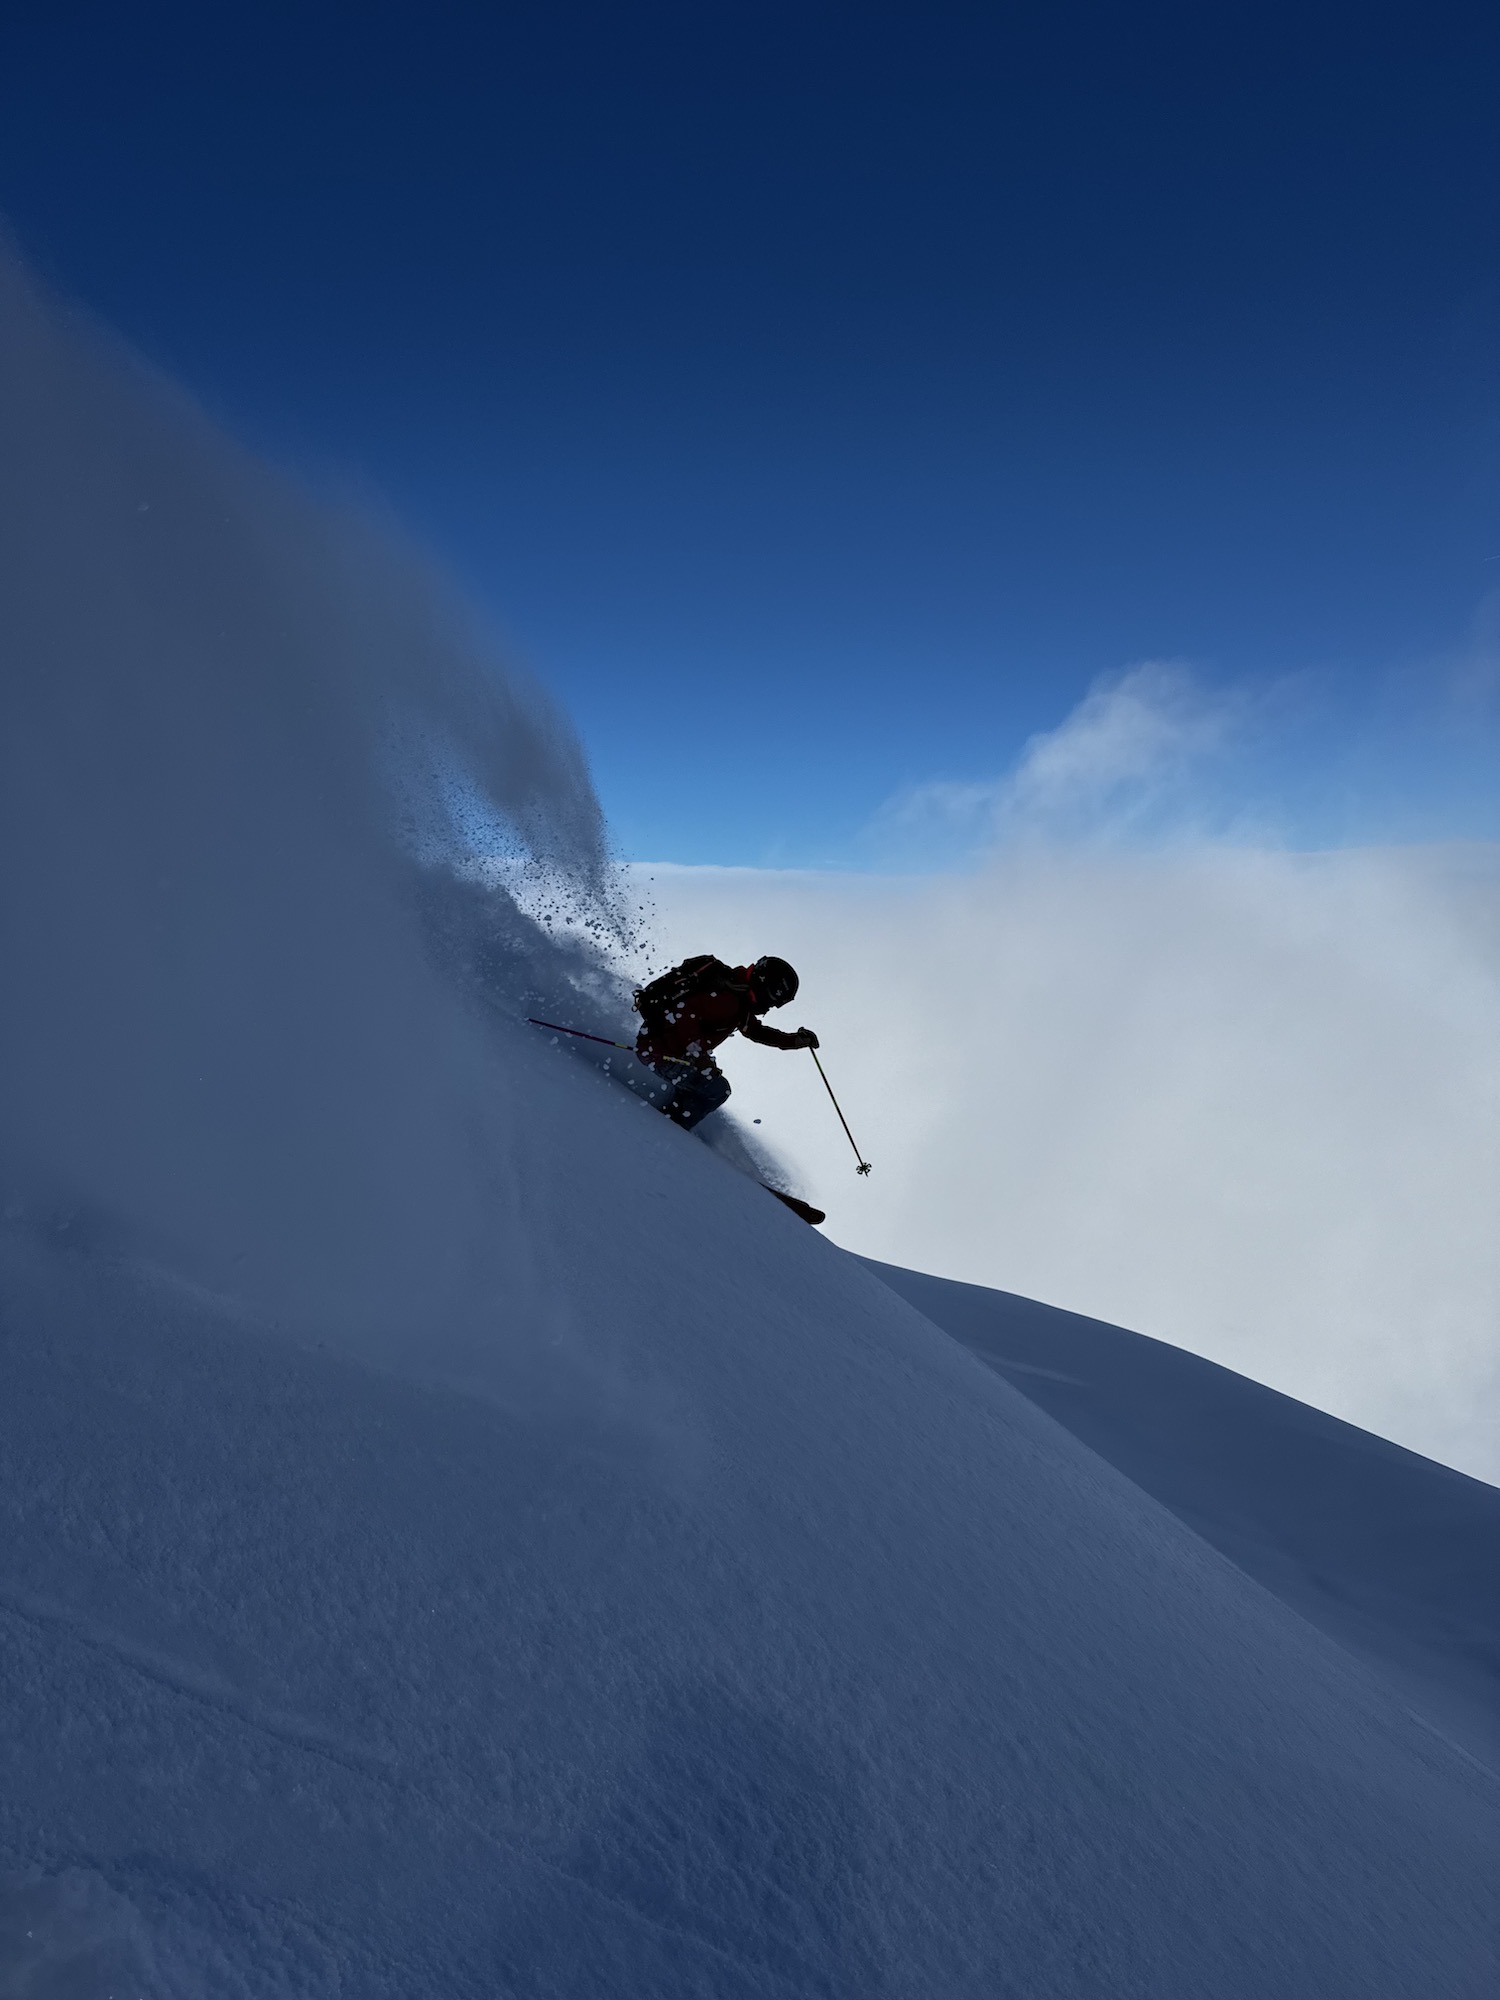 Skier skiing powder snow with a blue sky background.